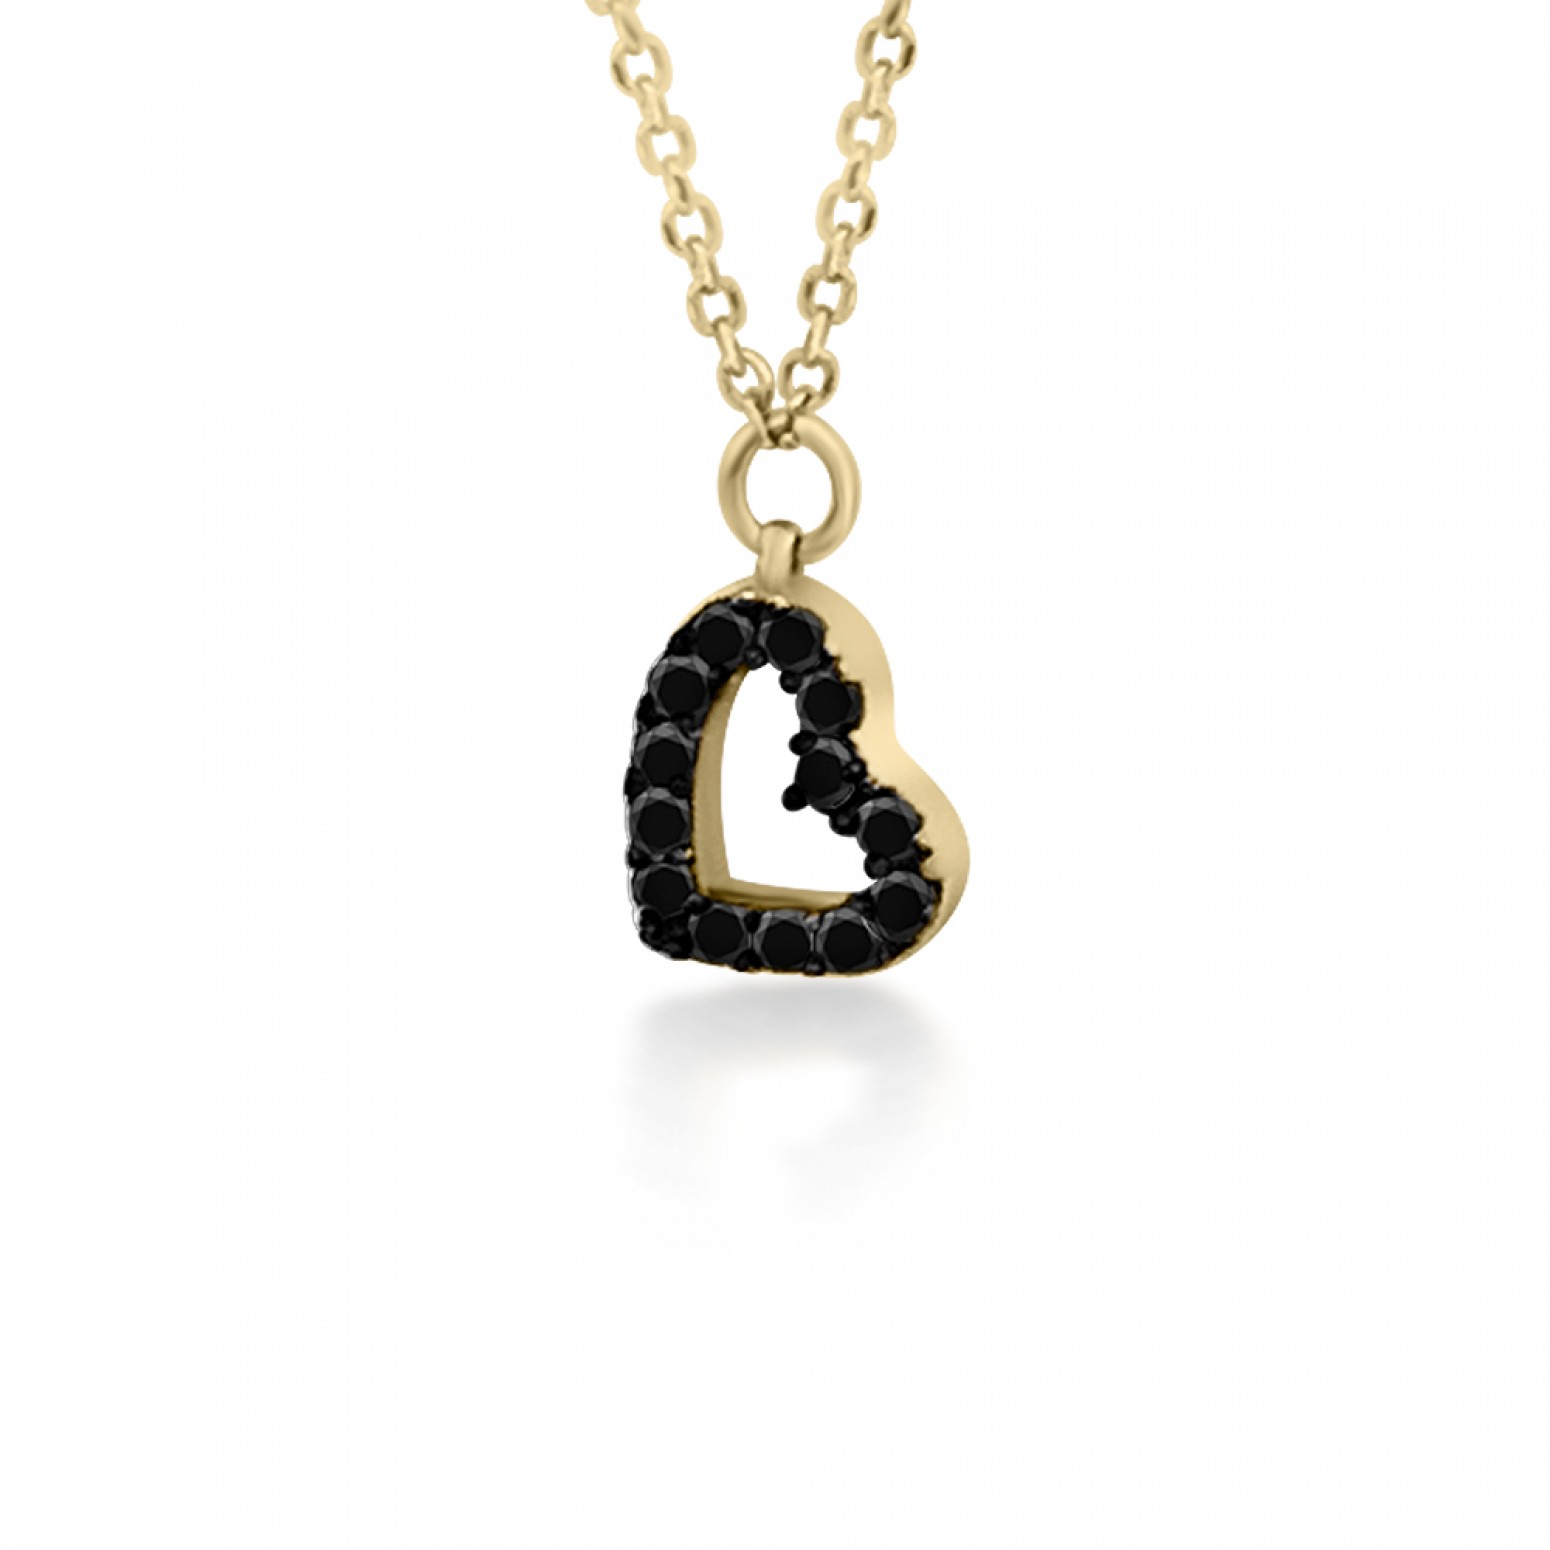 Heart necklace, Κ9 gold with black zircon, ko5091 NECKLACES Κοσμηματα - chrilia.gr